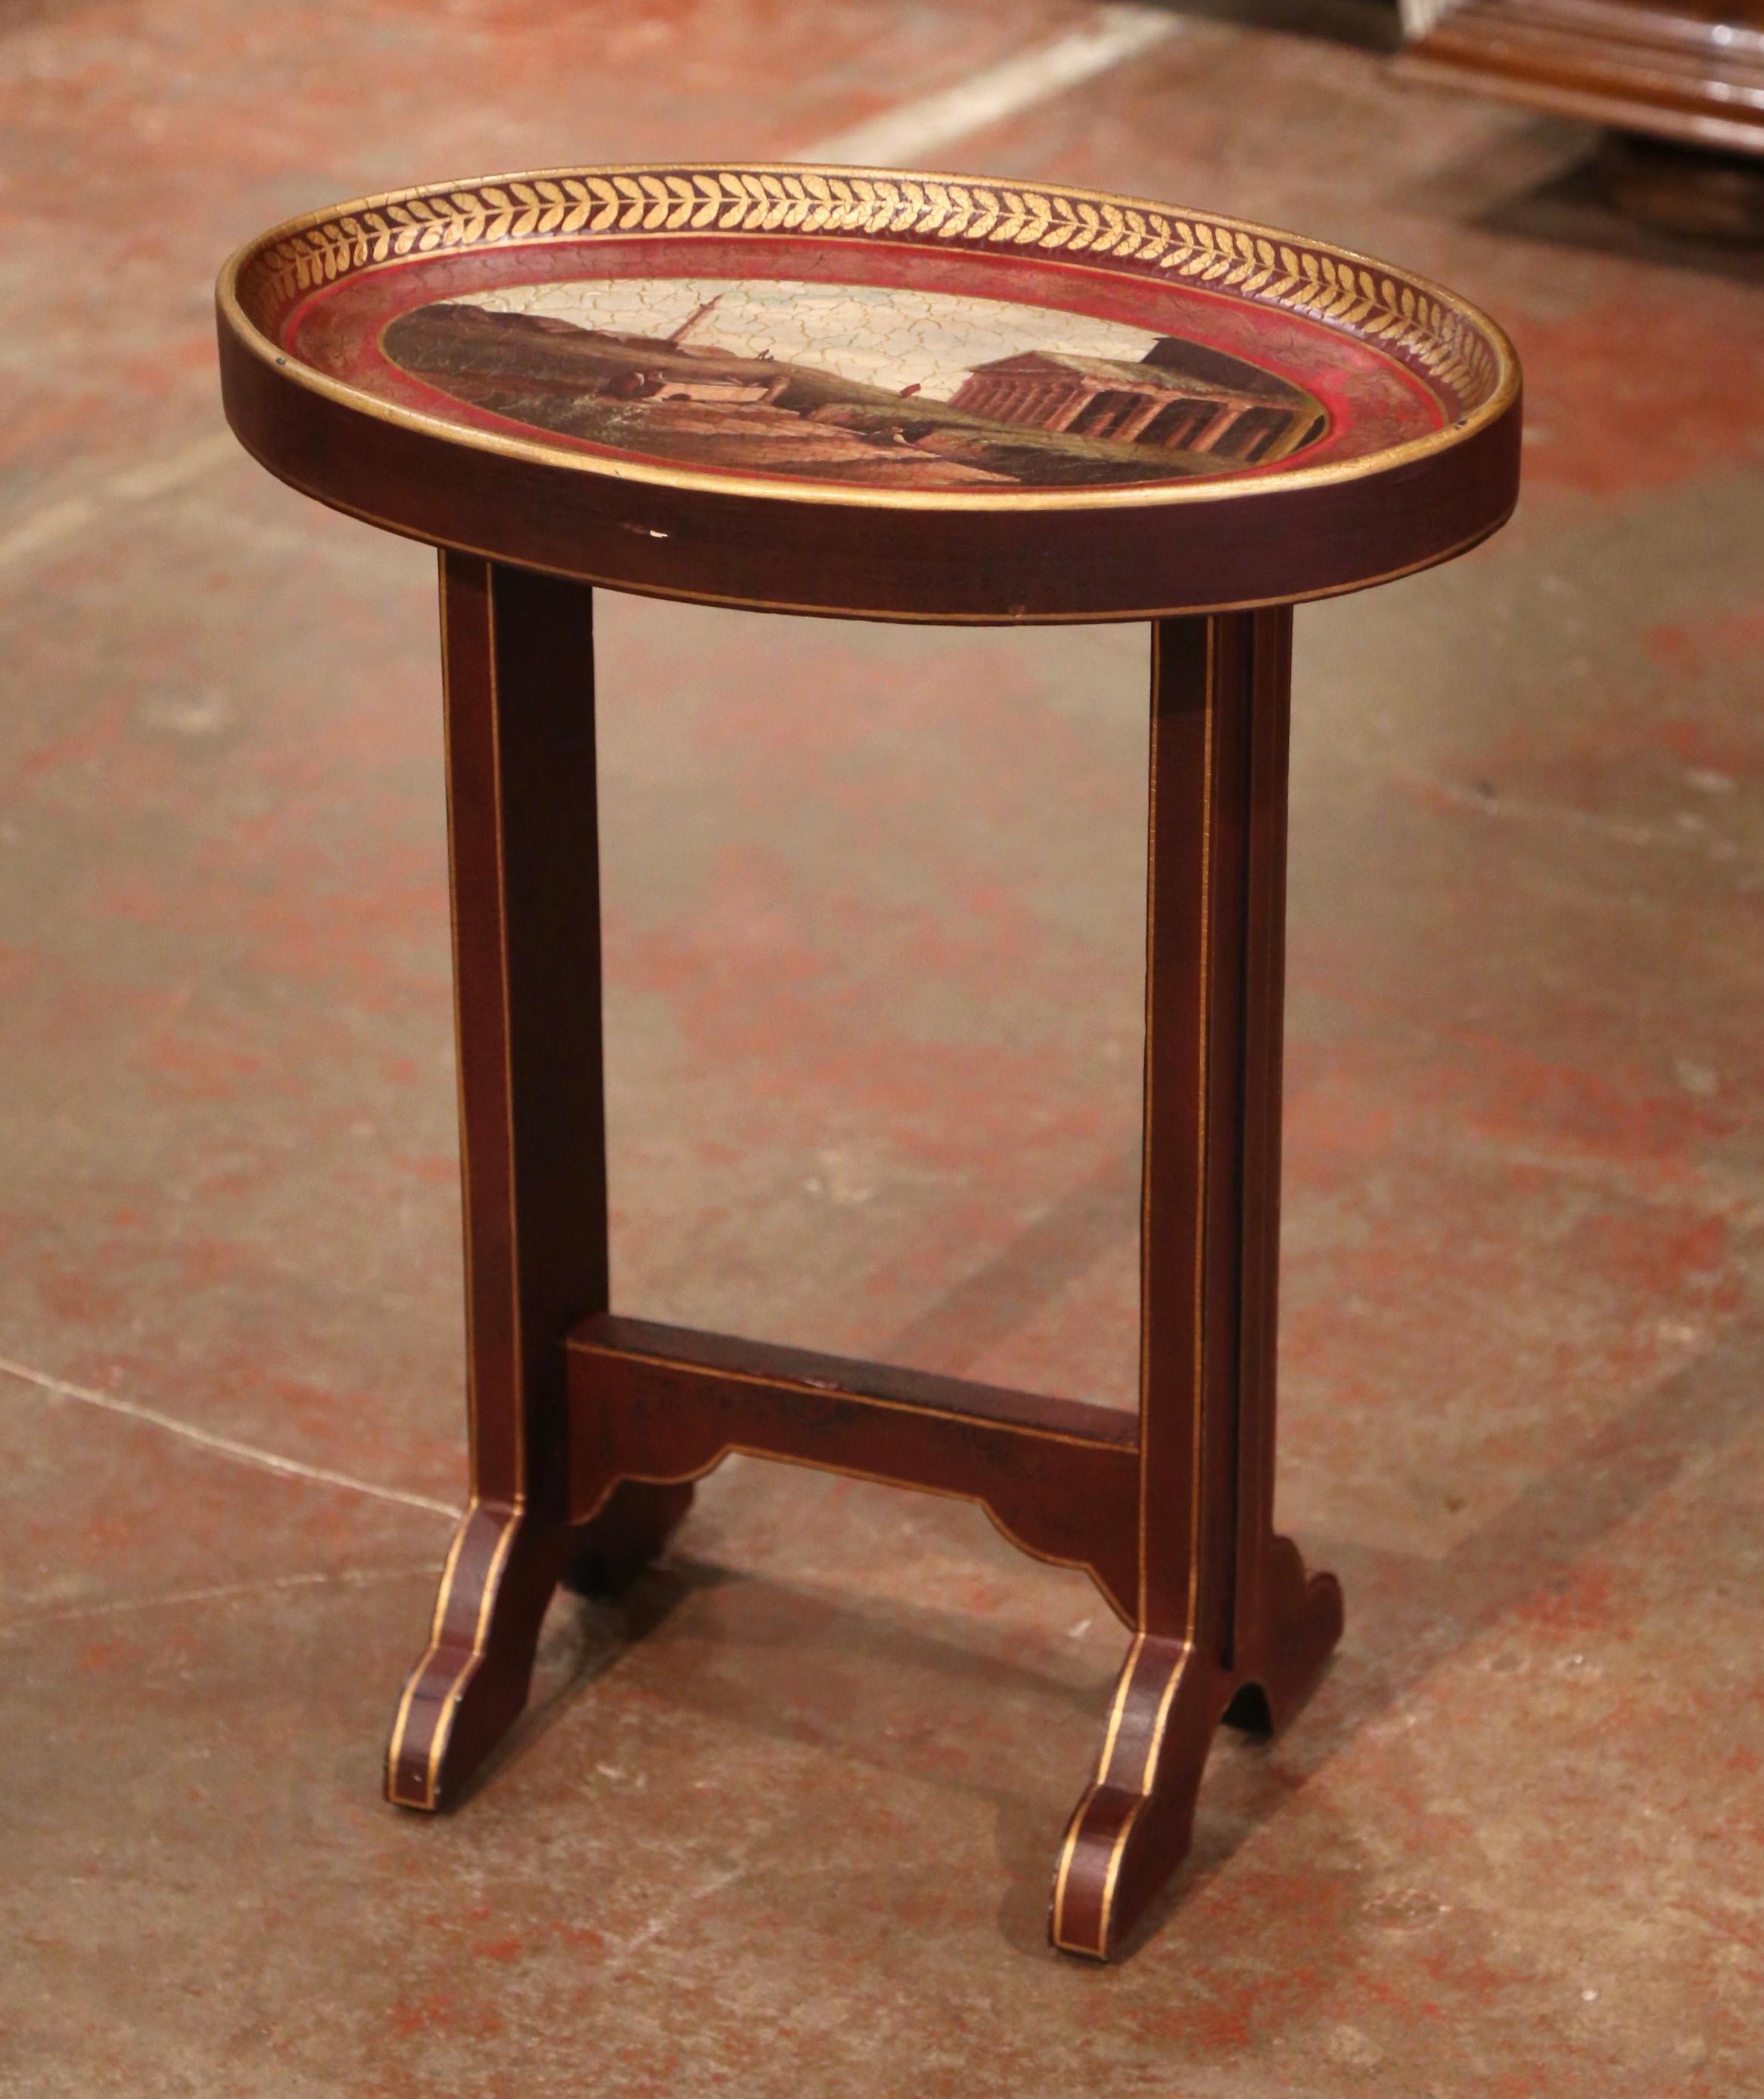 Hand-Painted Vintage Italian Oval Painted Side Table